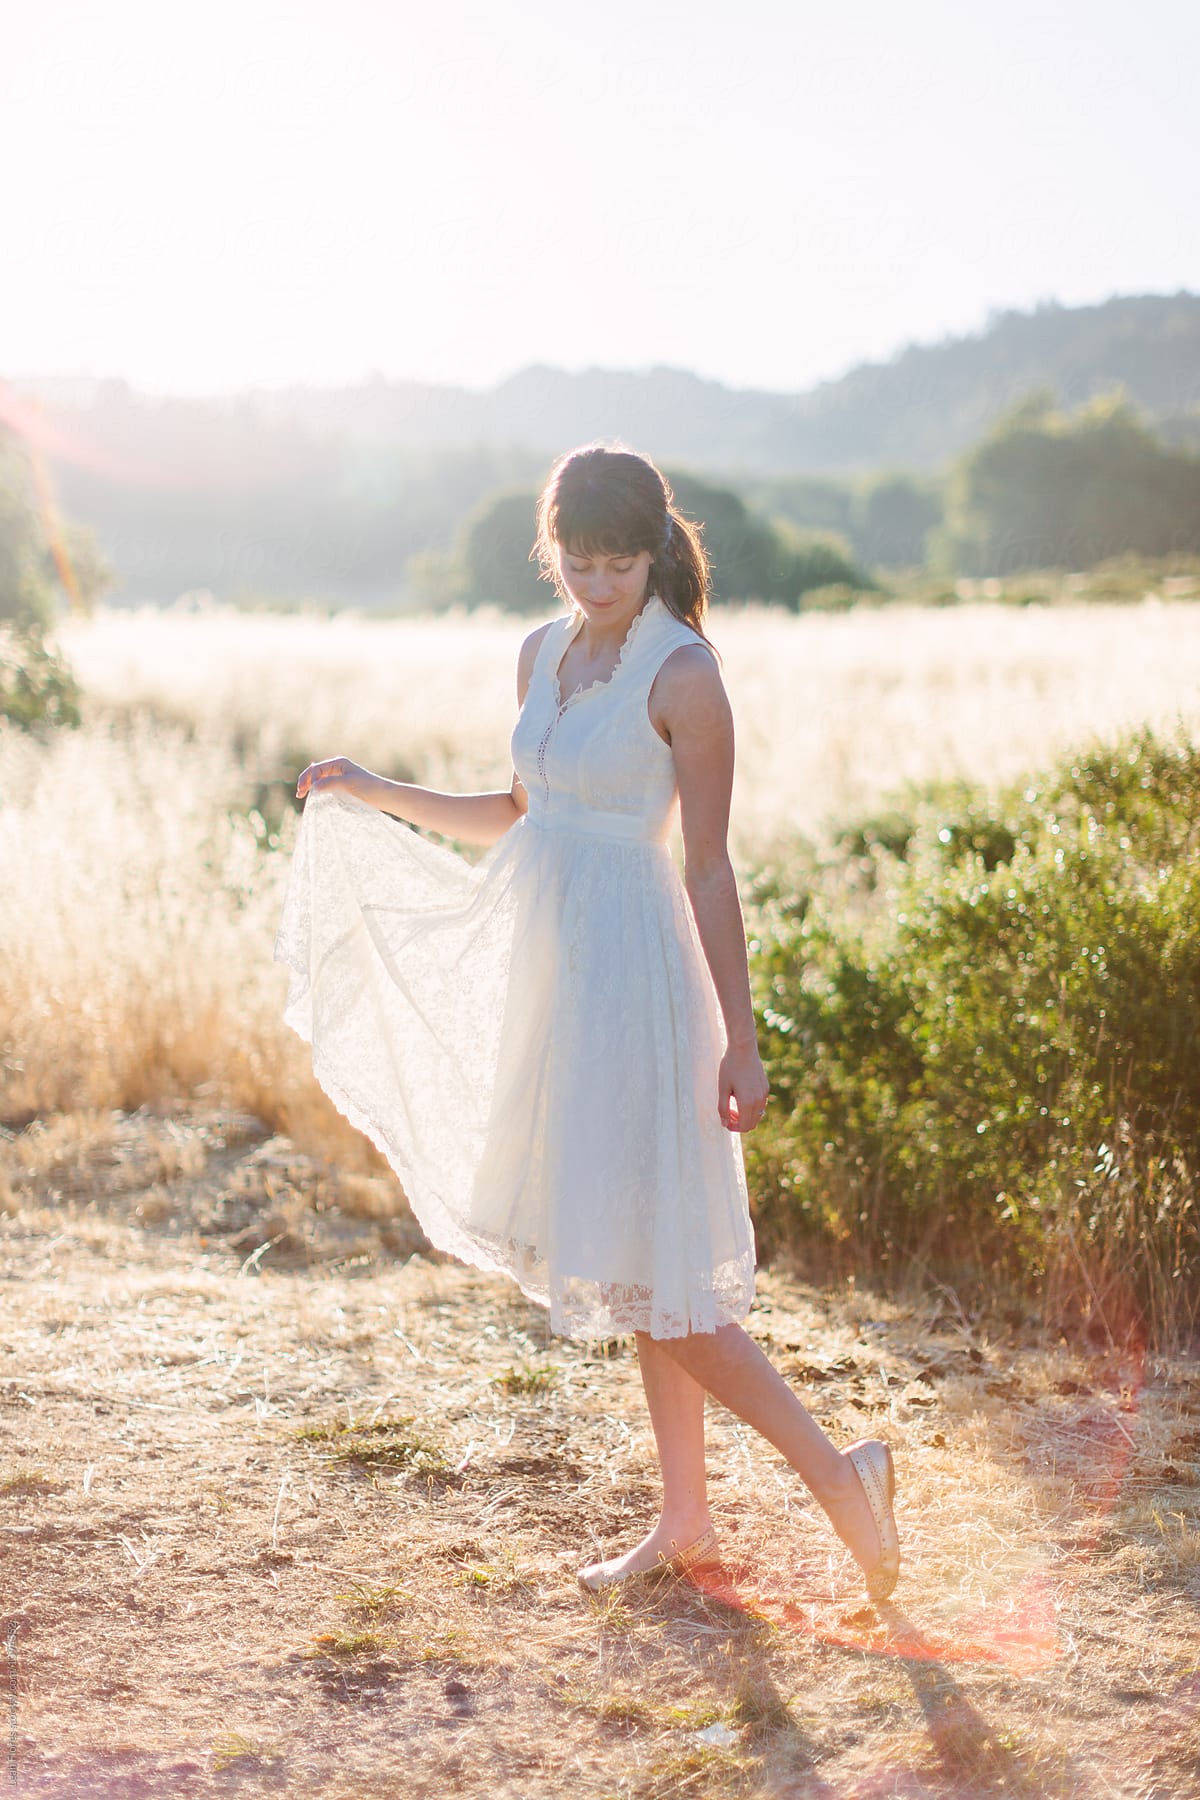 Woman in Lace, Vintage Dress Standing in Field